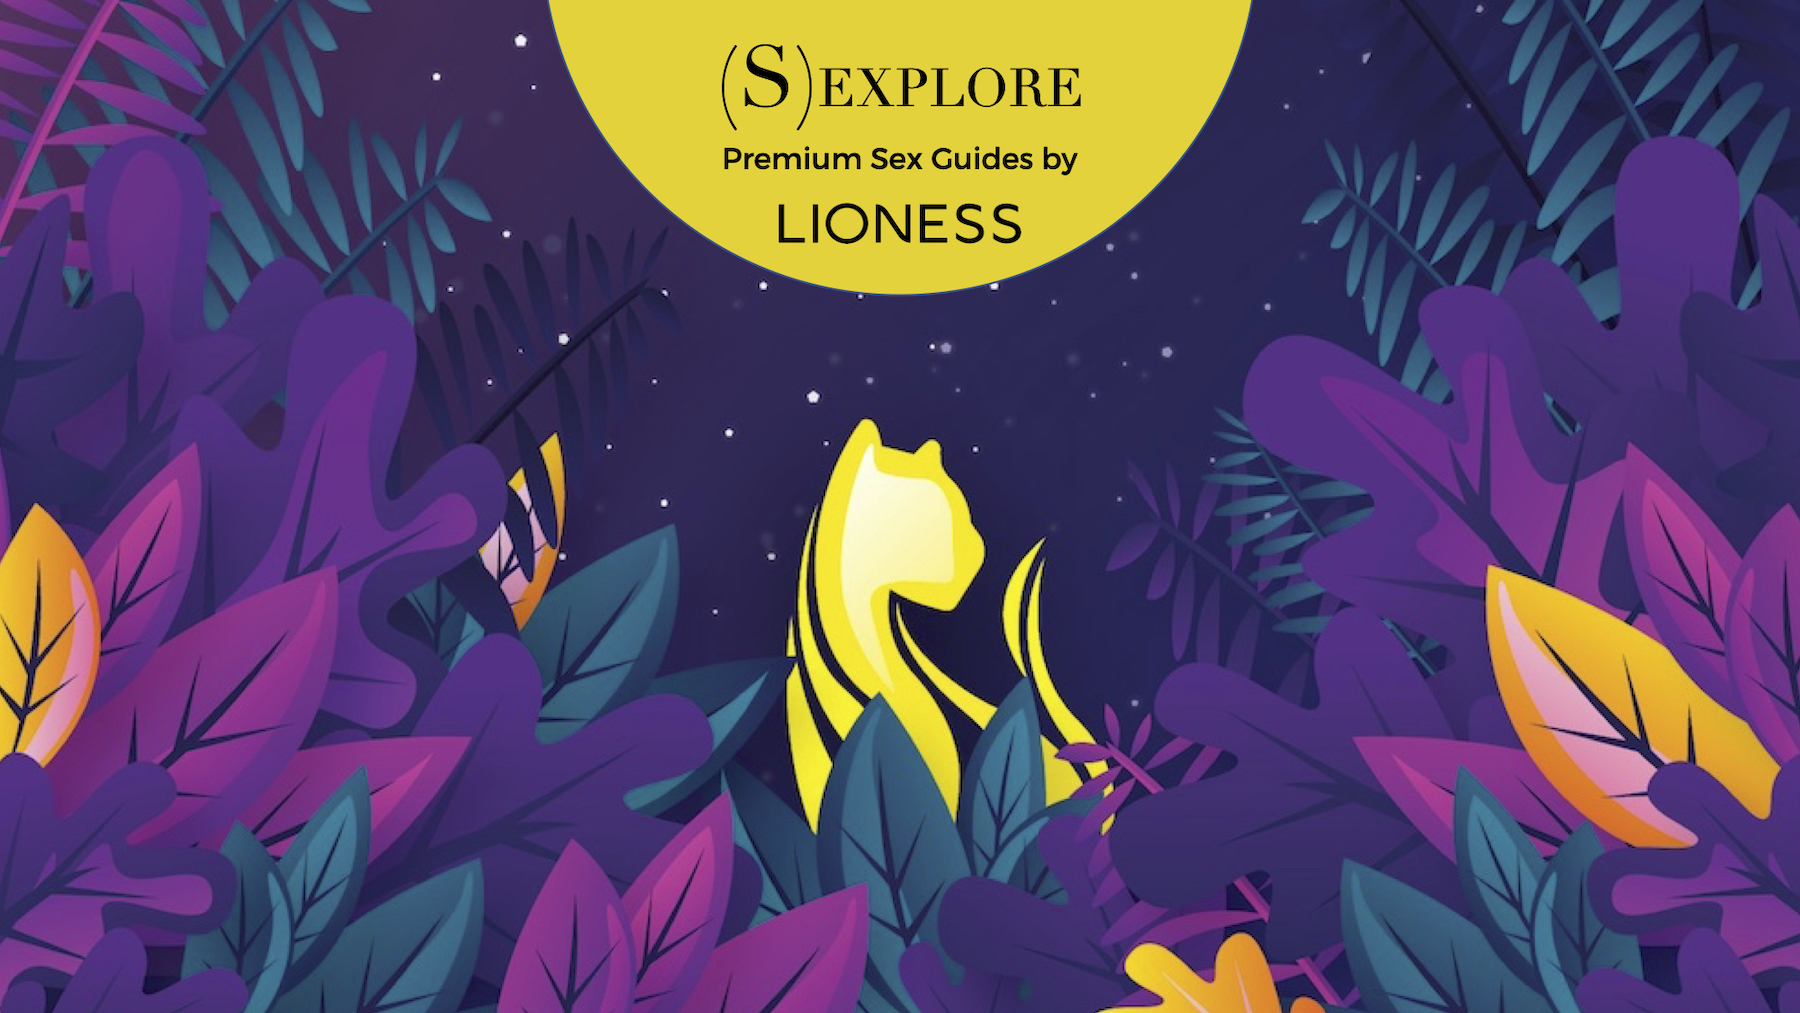 Lioness Sexplore